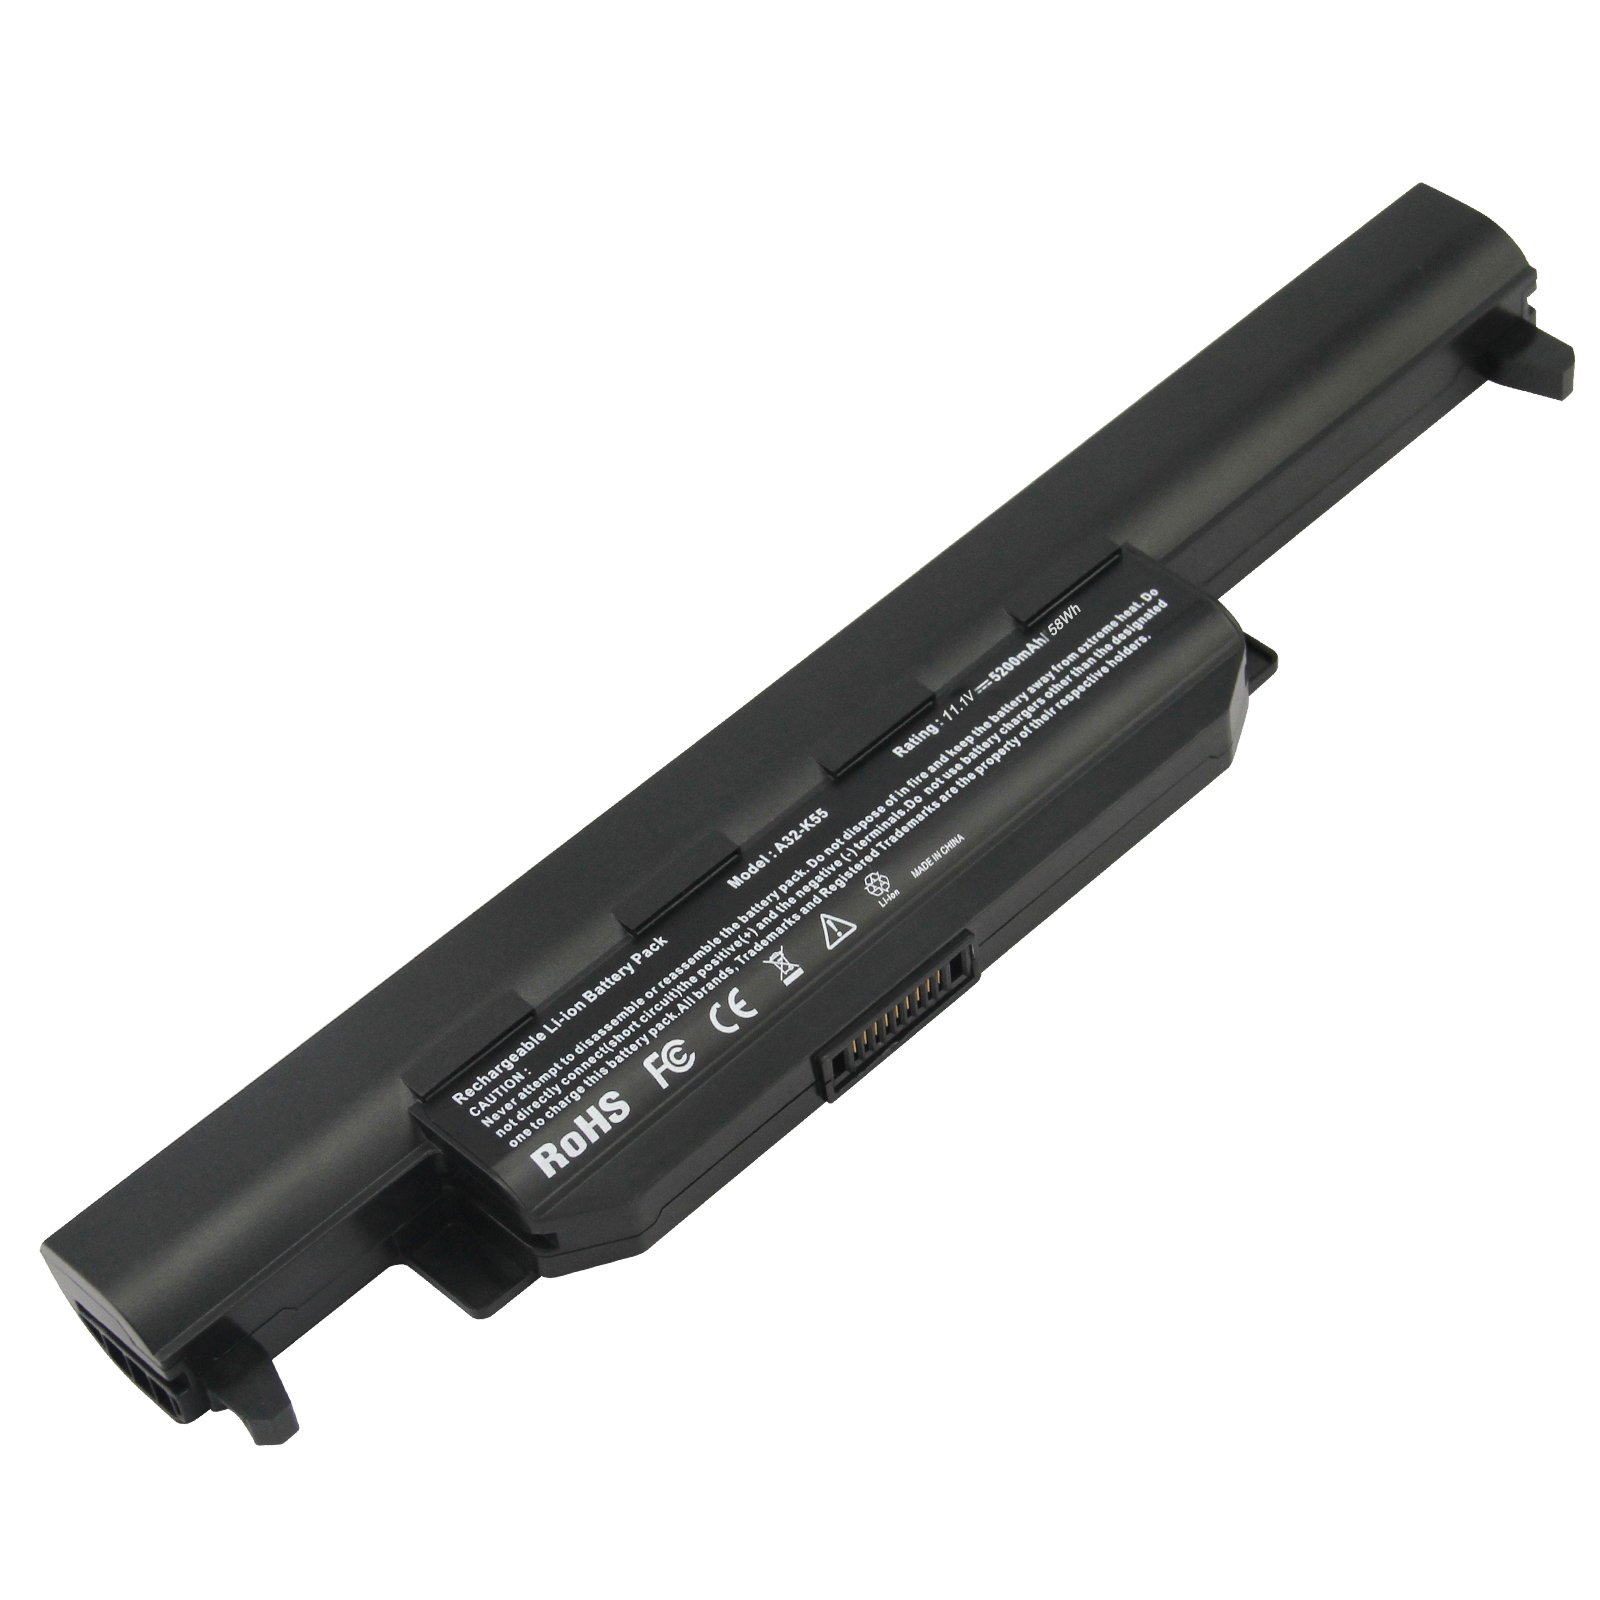 A32-K55 Laptop Battery for ASUS A33-K55 A41-K55 A45 A55 A75